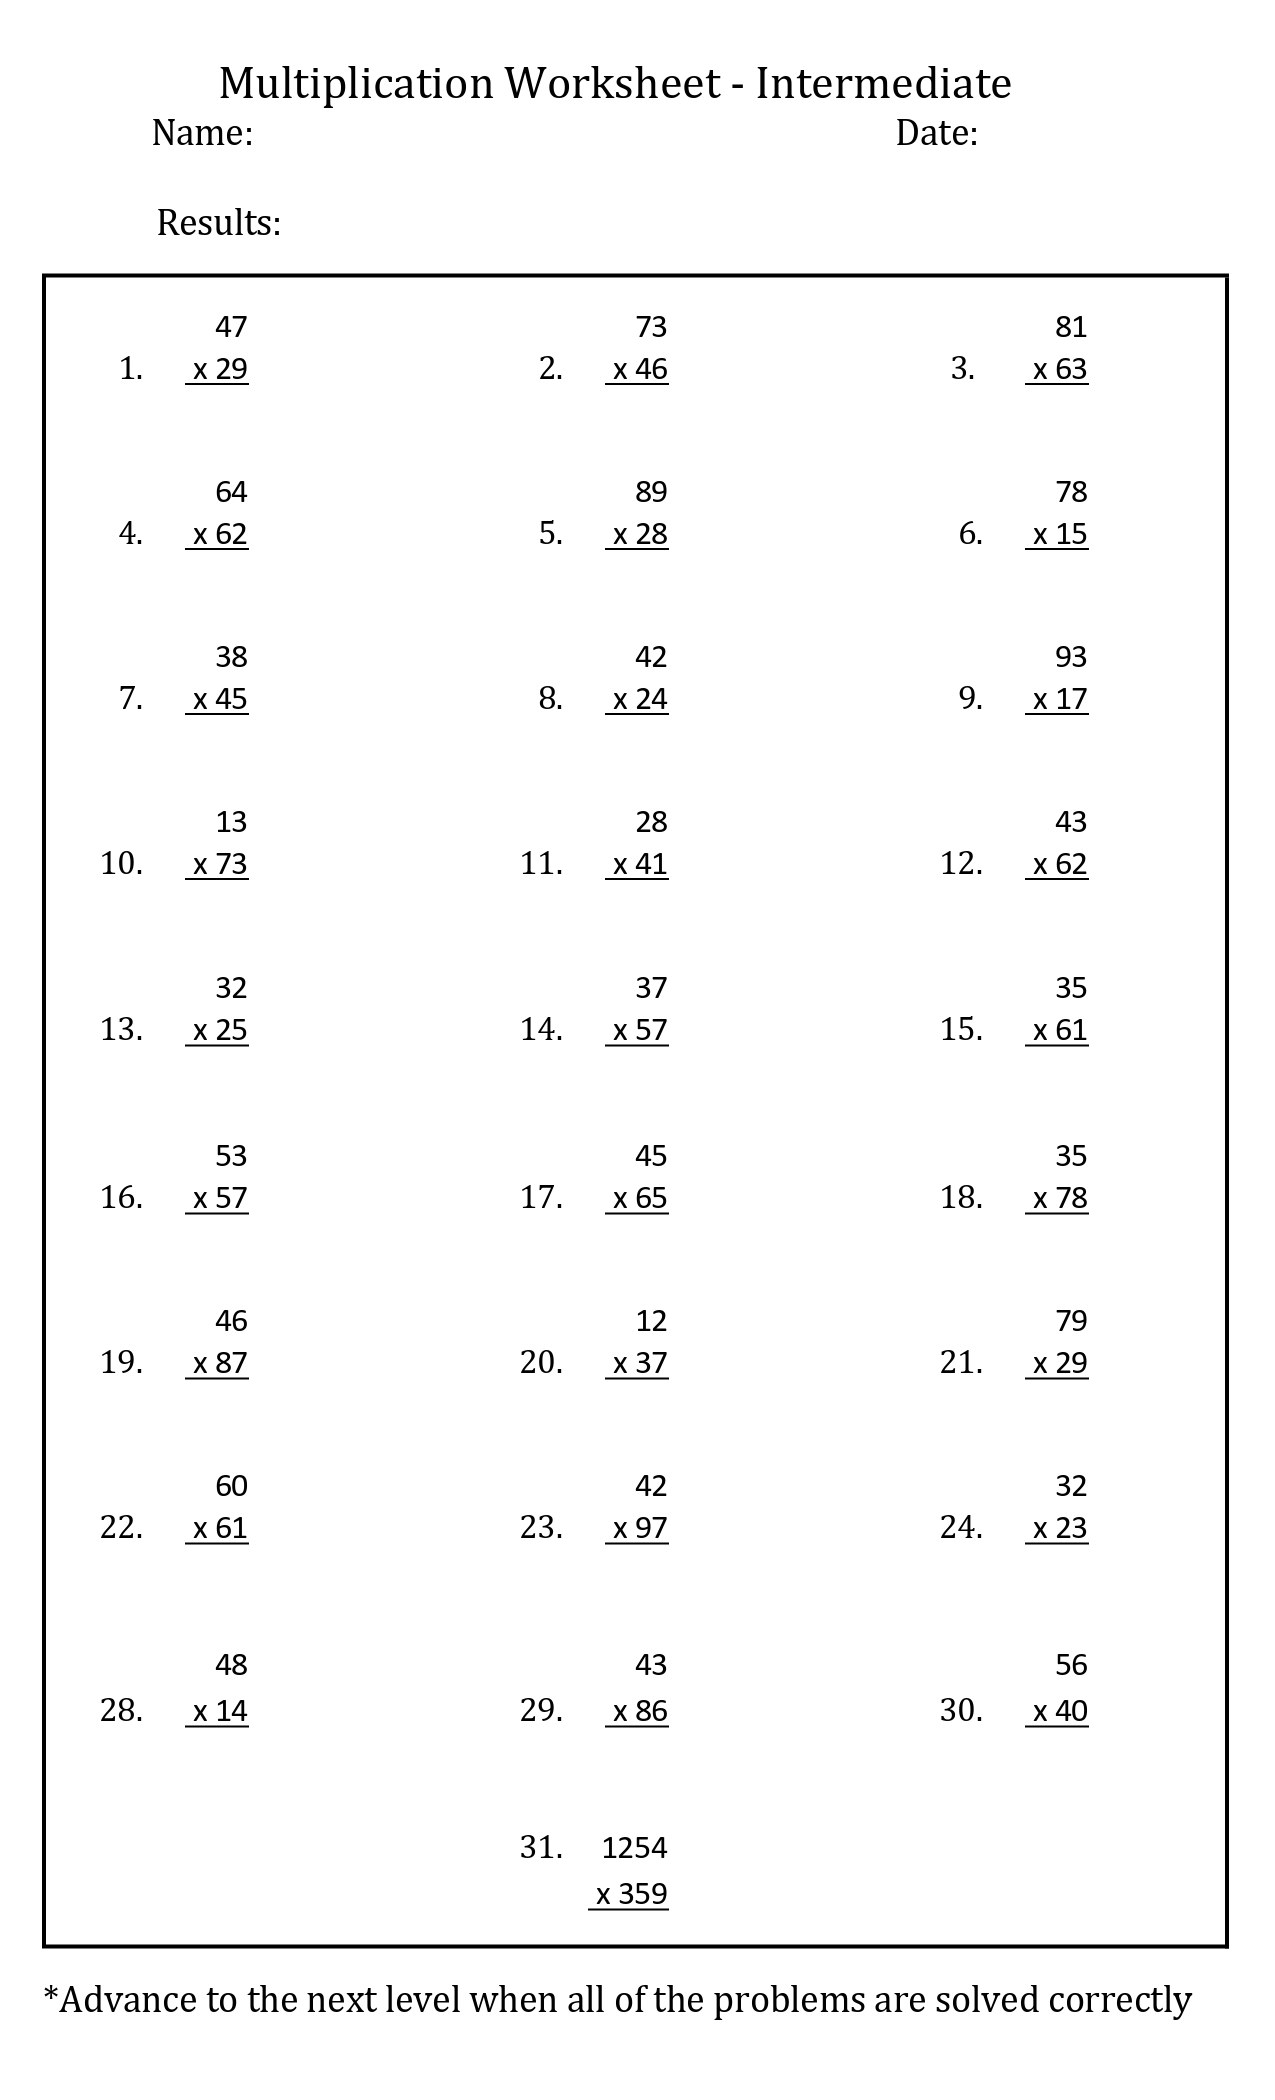 free-printable-multiplication-worksheets-for-students-printerfriendly